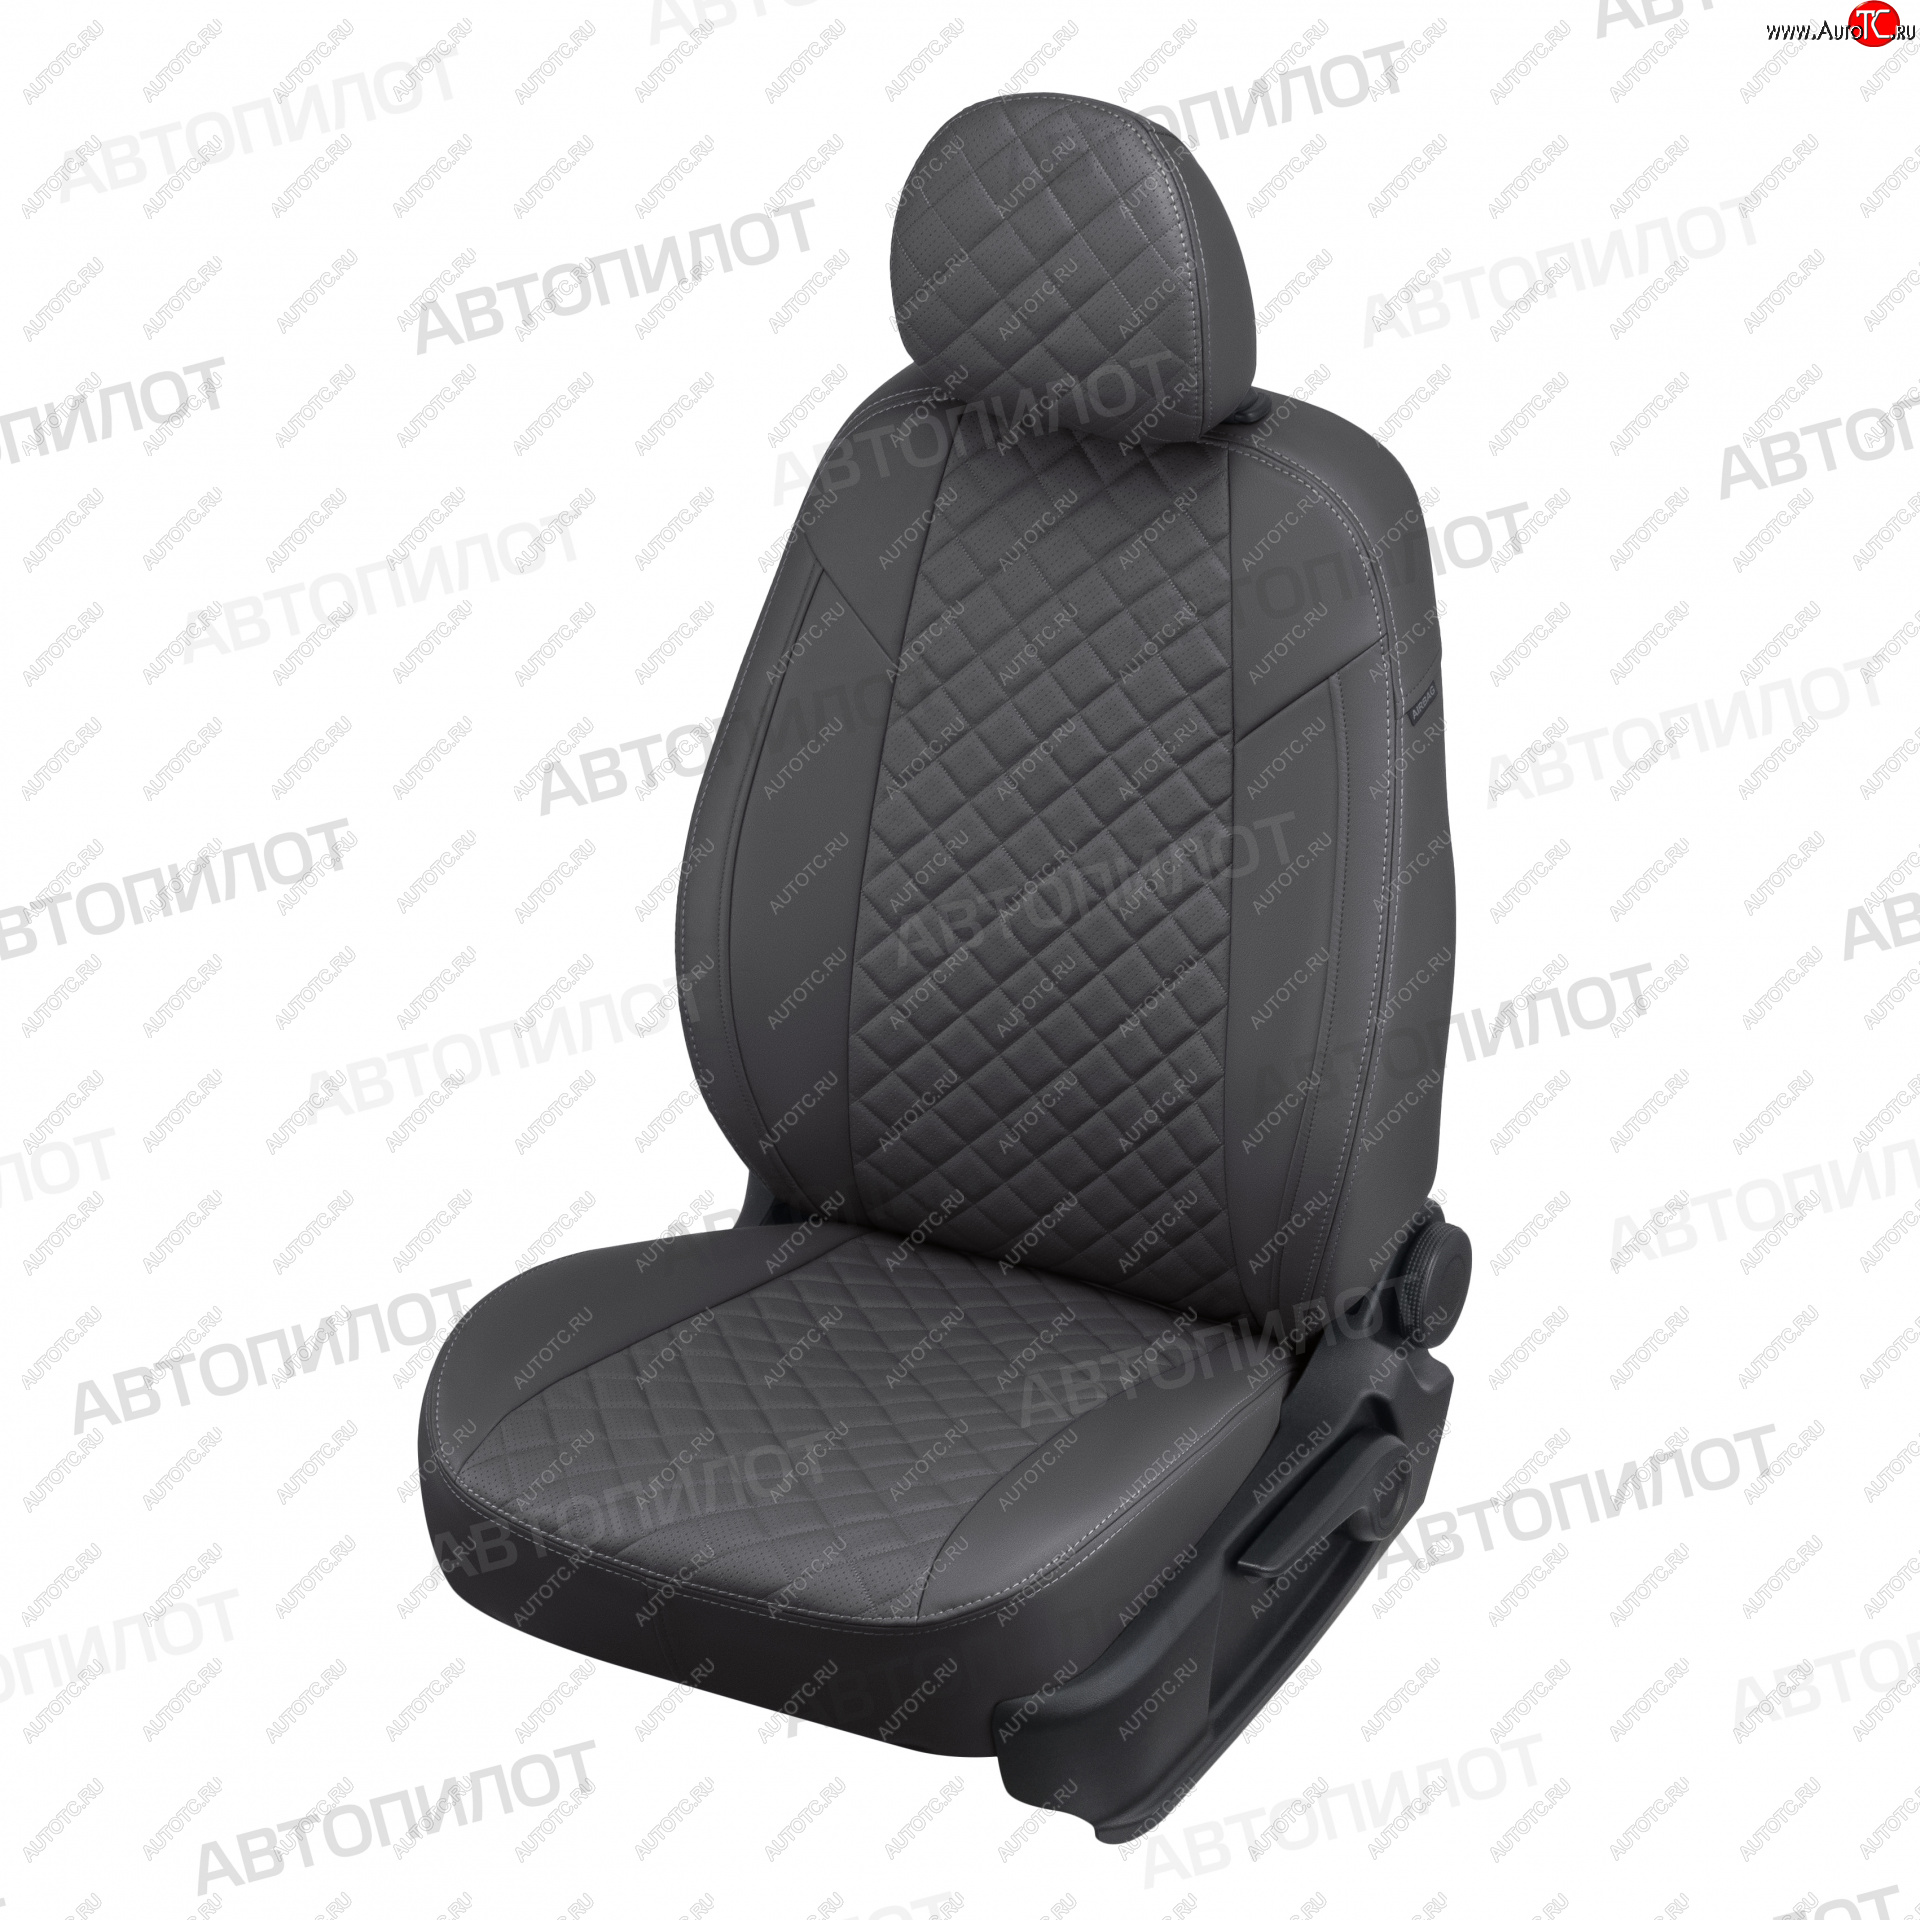 13 999 р. Чехлы сидений (экокожа) Автопилот Ромб  Fiat Bravo  198 (2007-2015) (темно-серый)